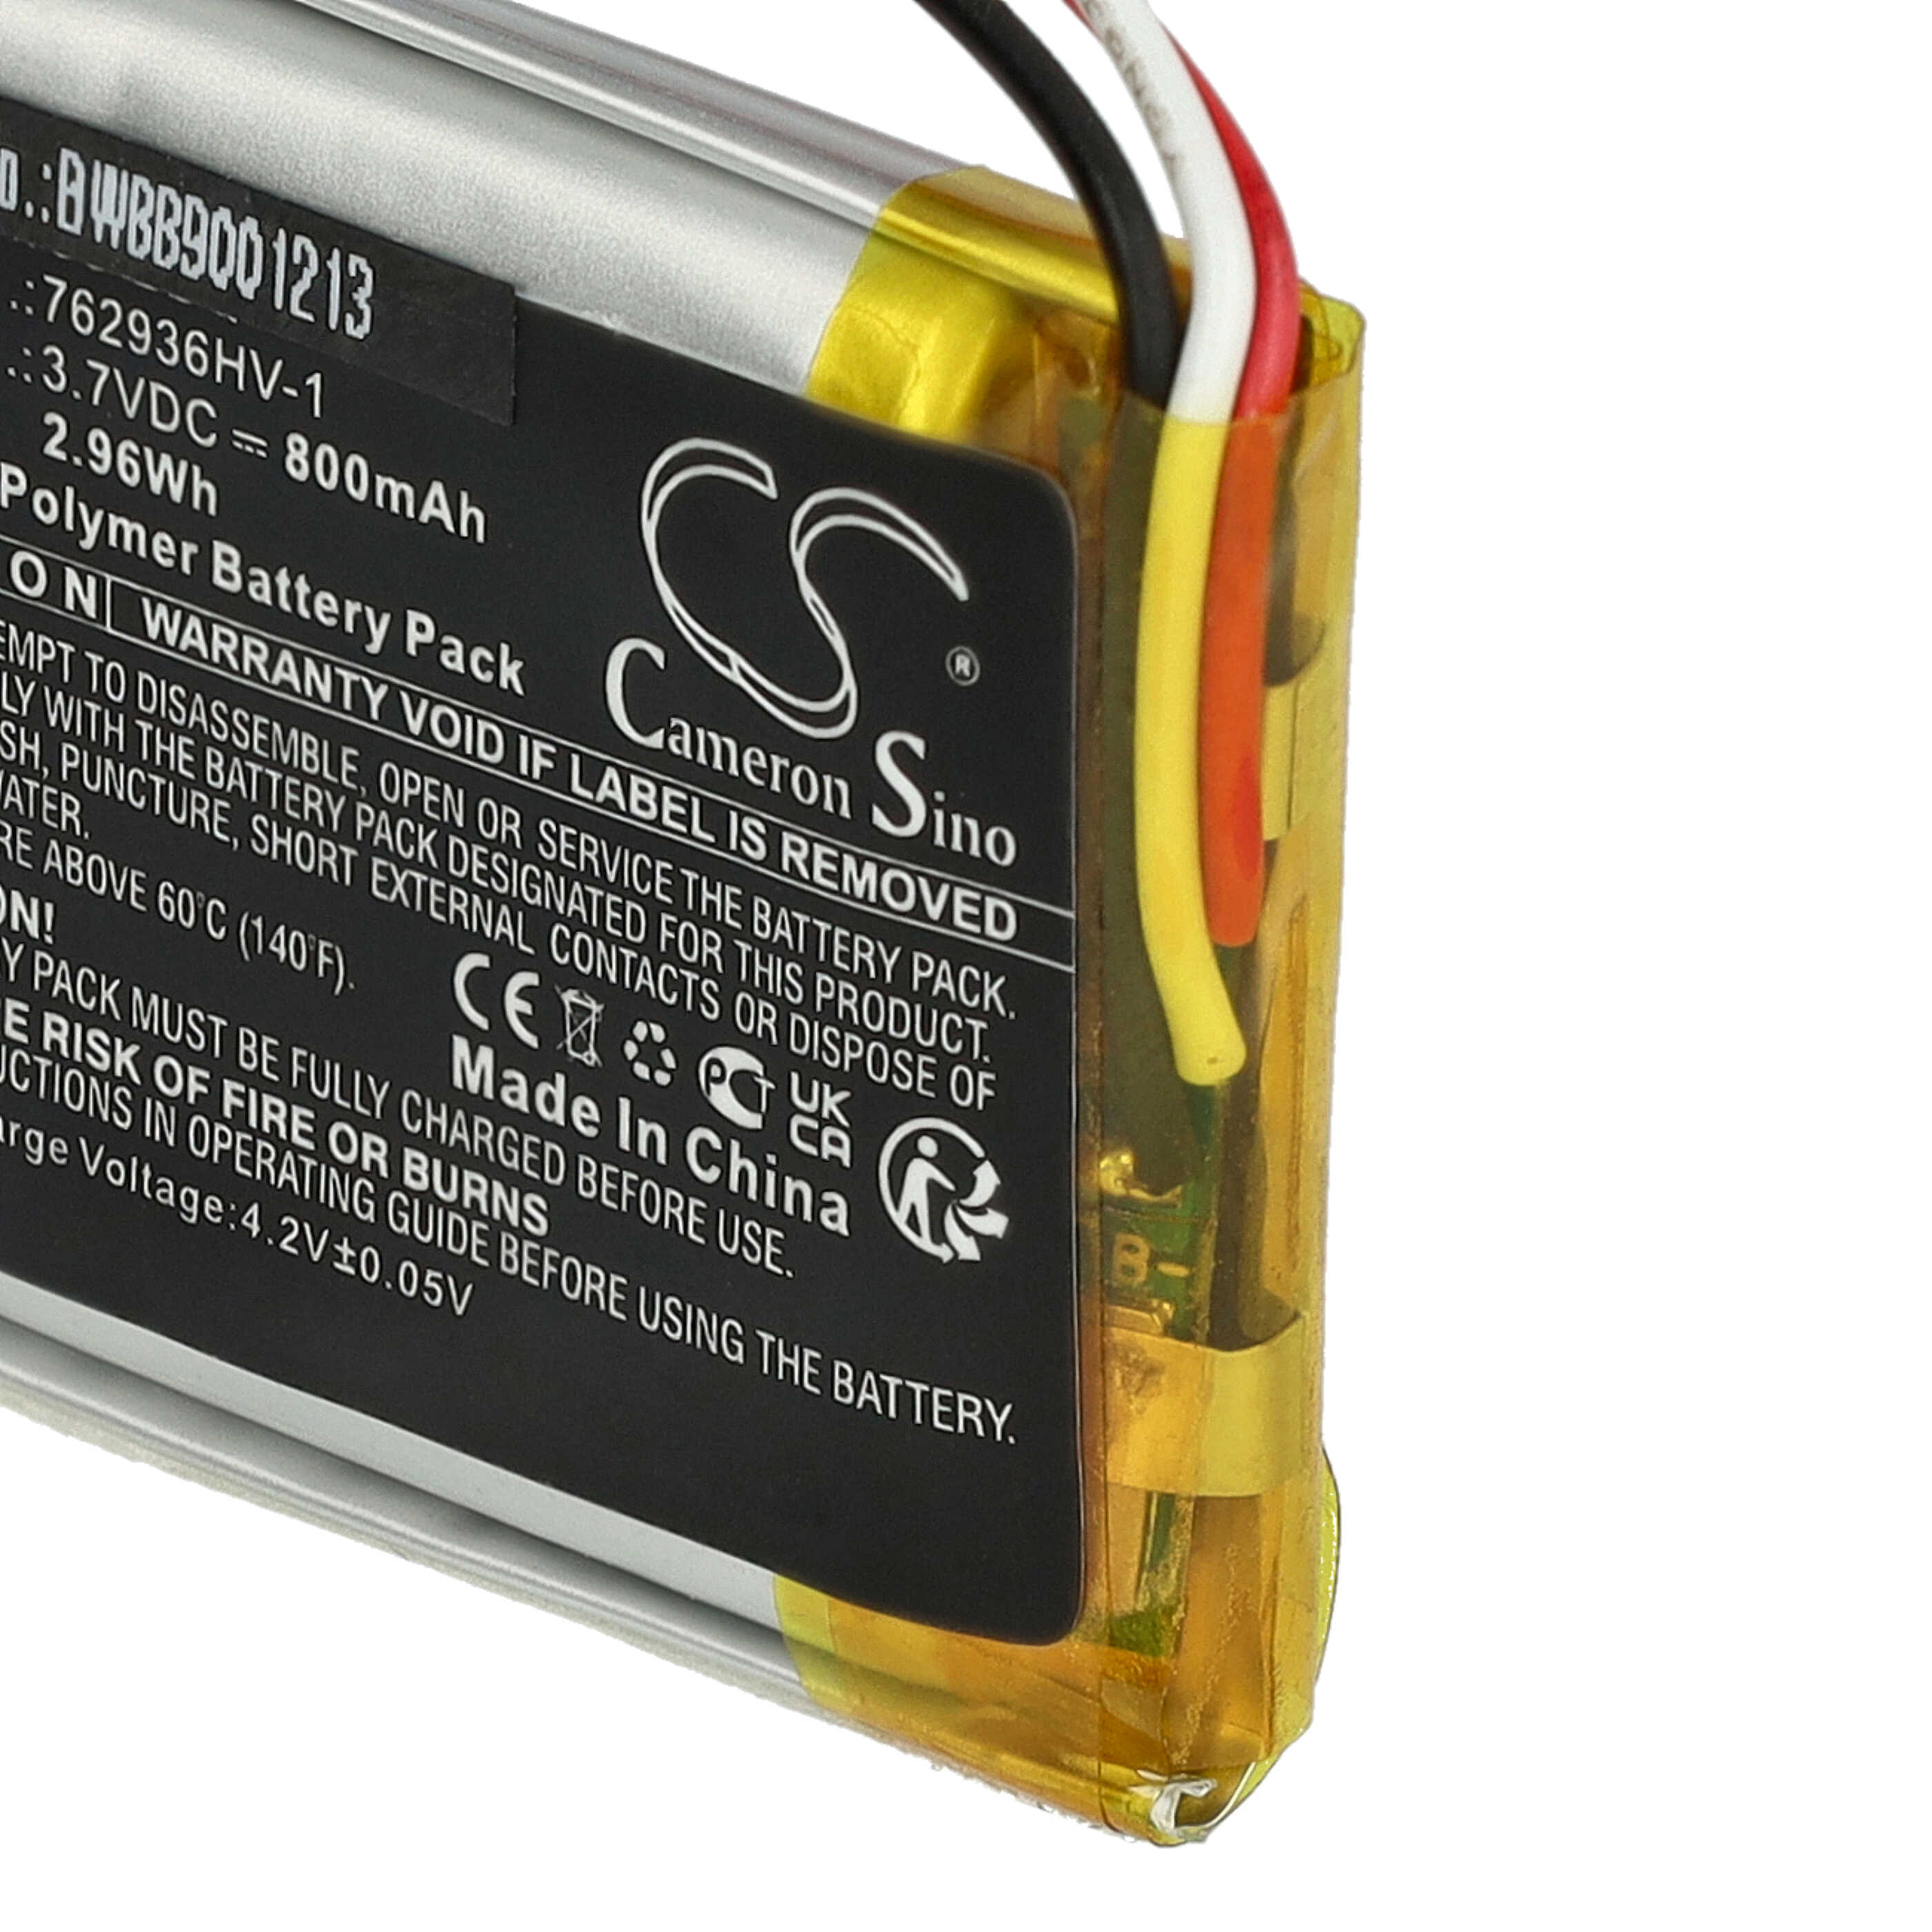 Batería reemplaza Bose 762936HV-1 para auriculares Bose - 800 mAh 3,7 V Li-poli